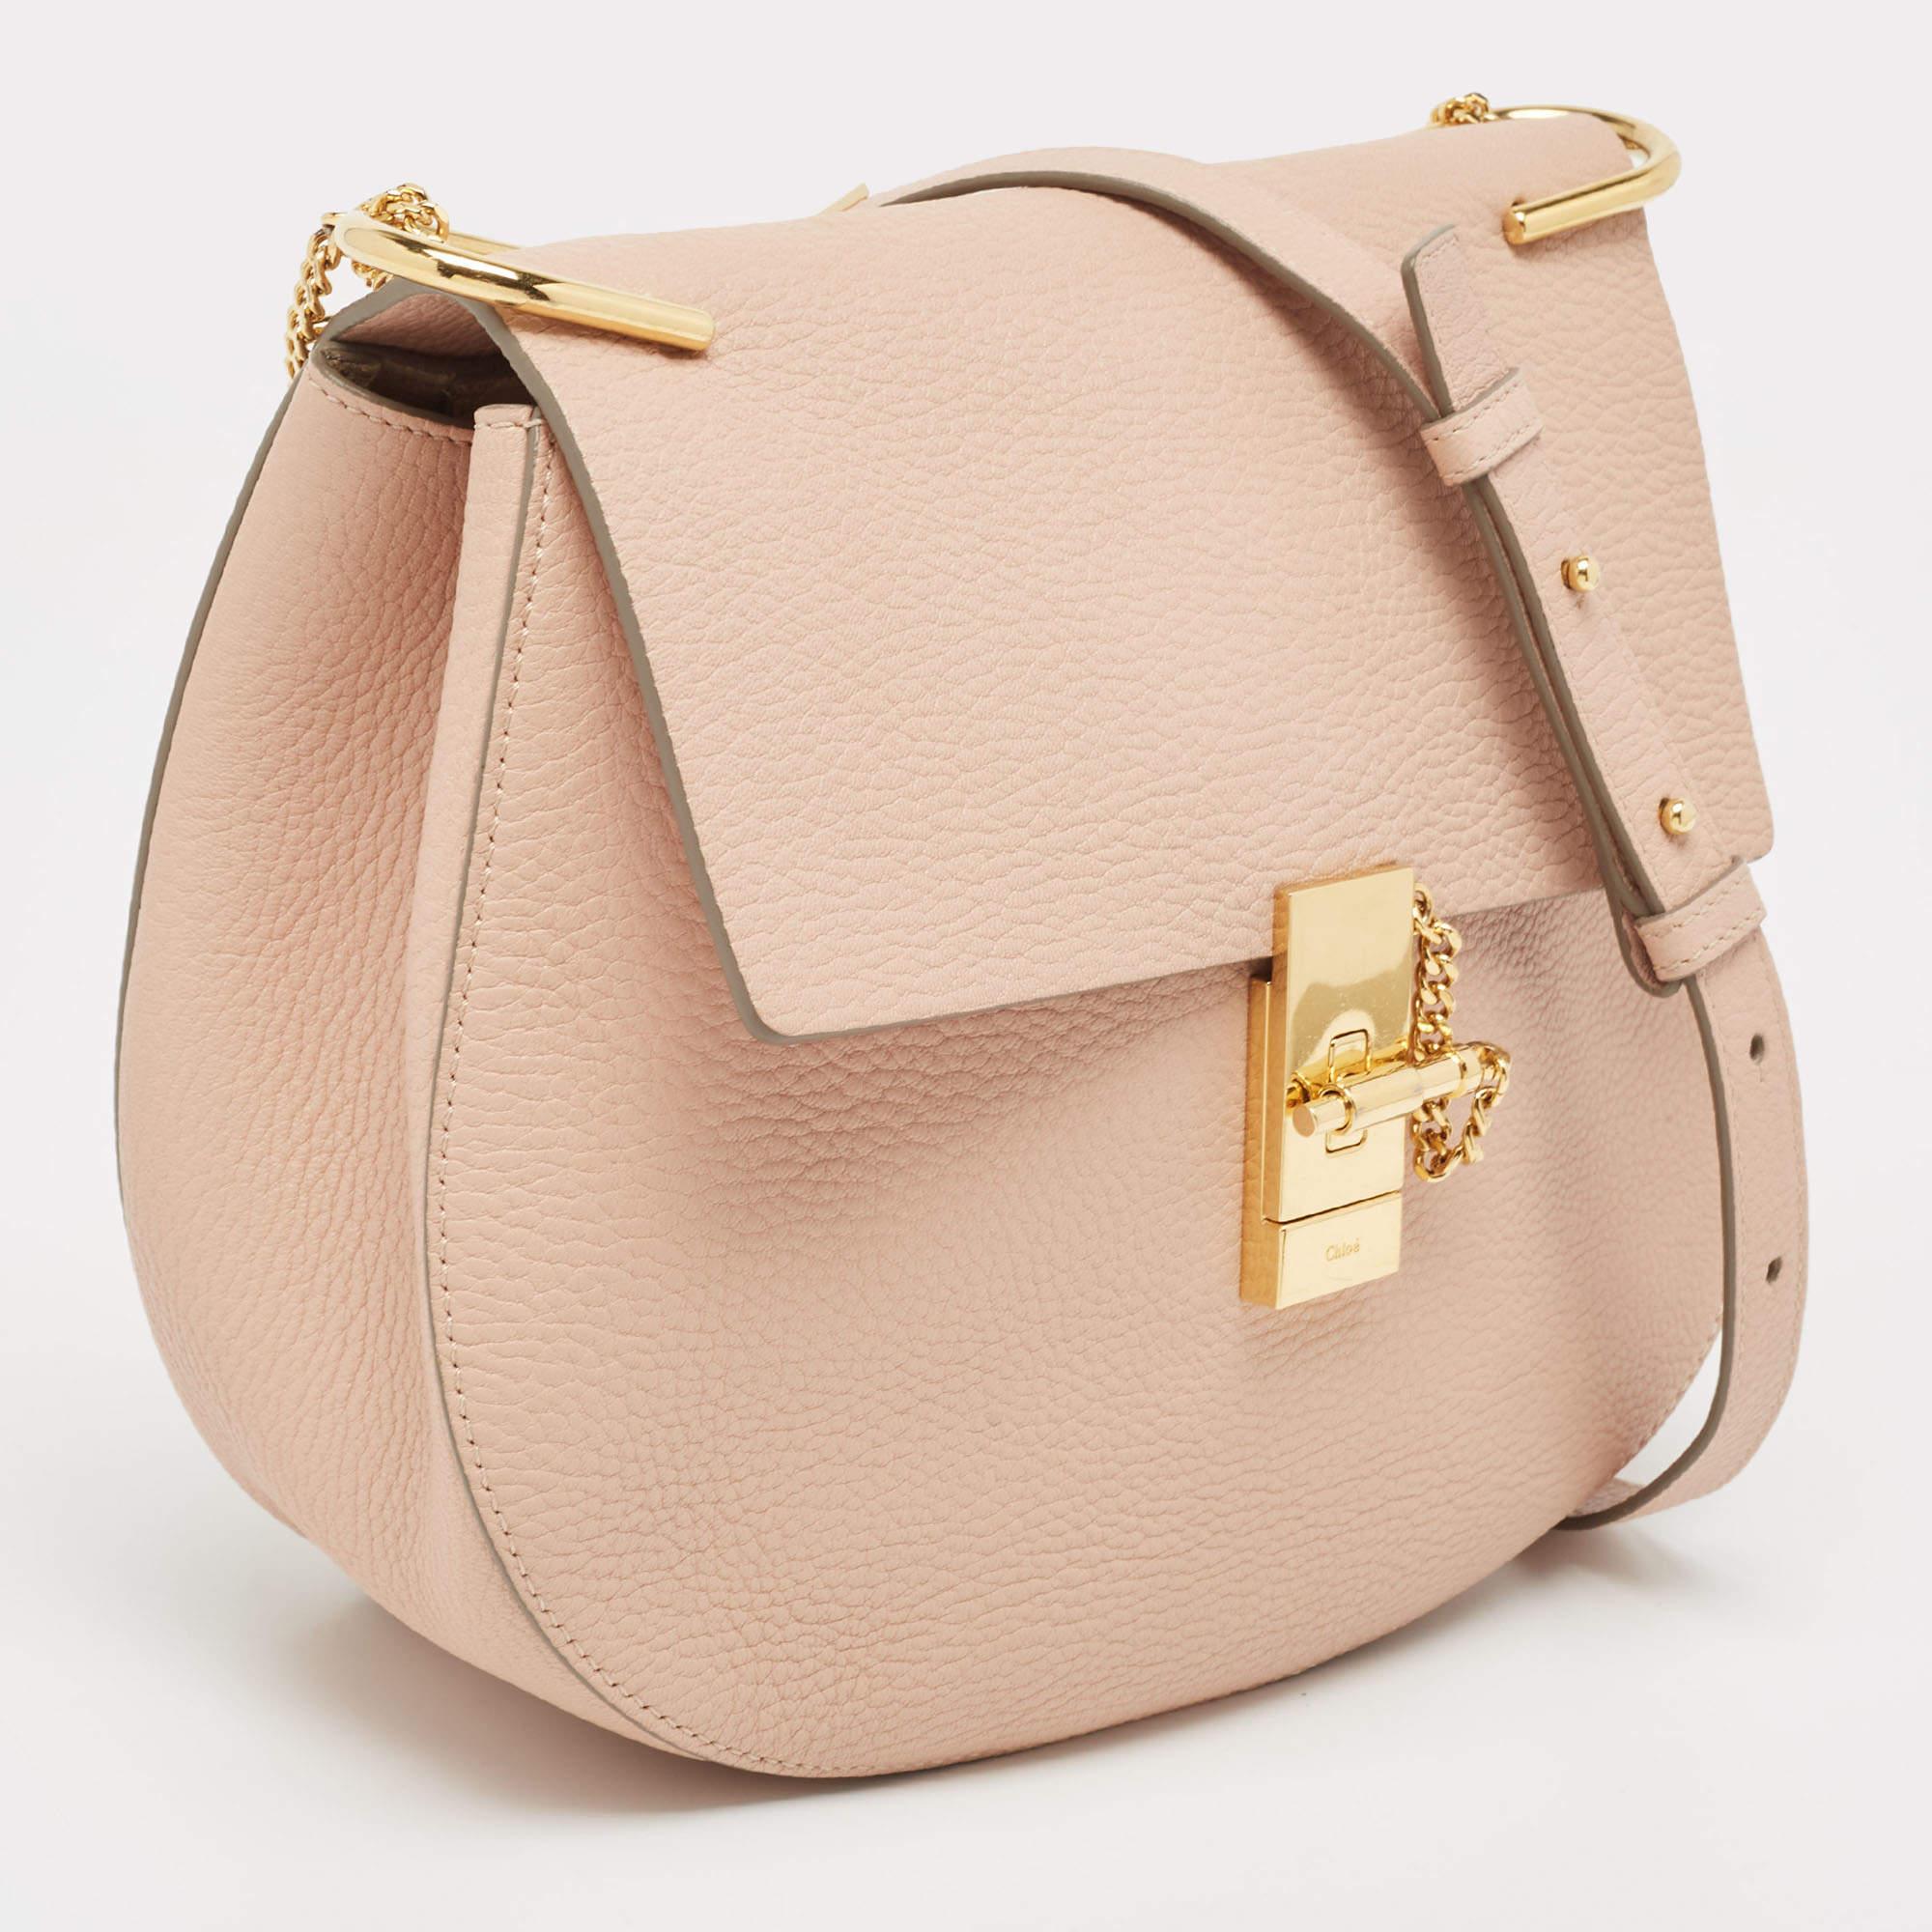 Chloe Rose Poudre Leather Large Drew Shoulder Bag In Good Condition For Sale In Dubai, Al Qouz 2